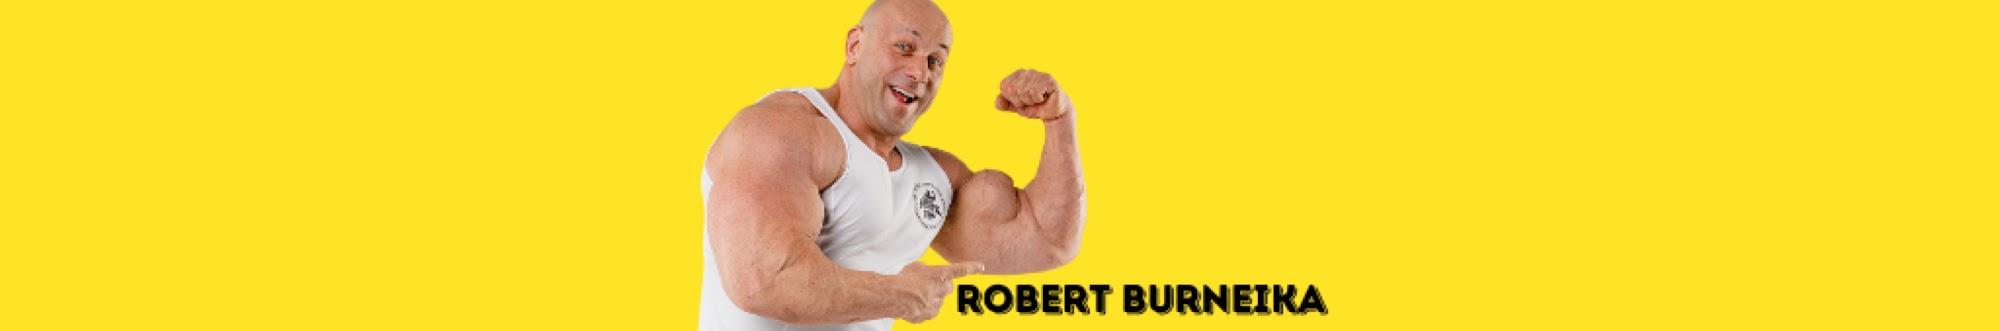 Robert Burneika